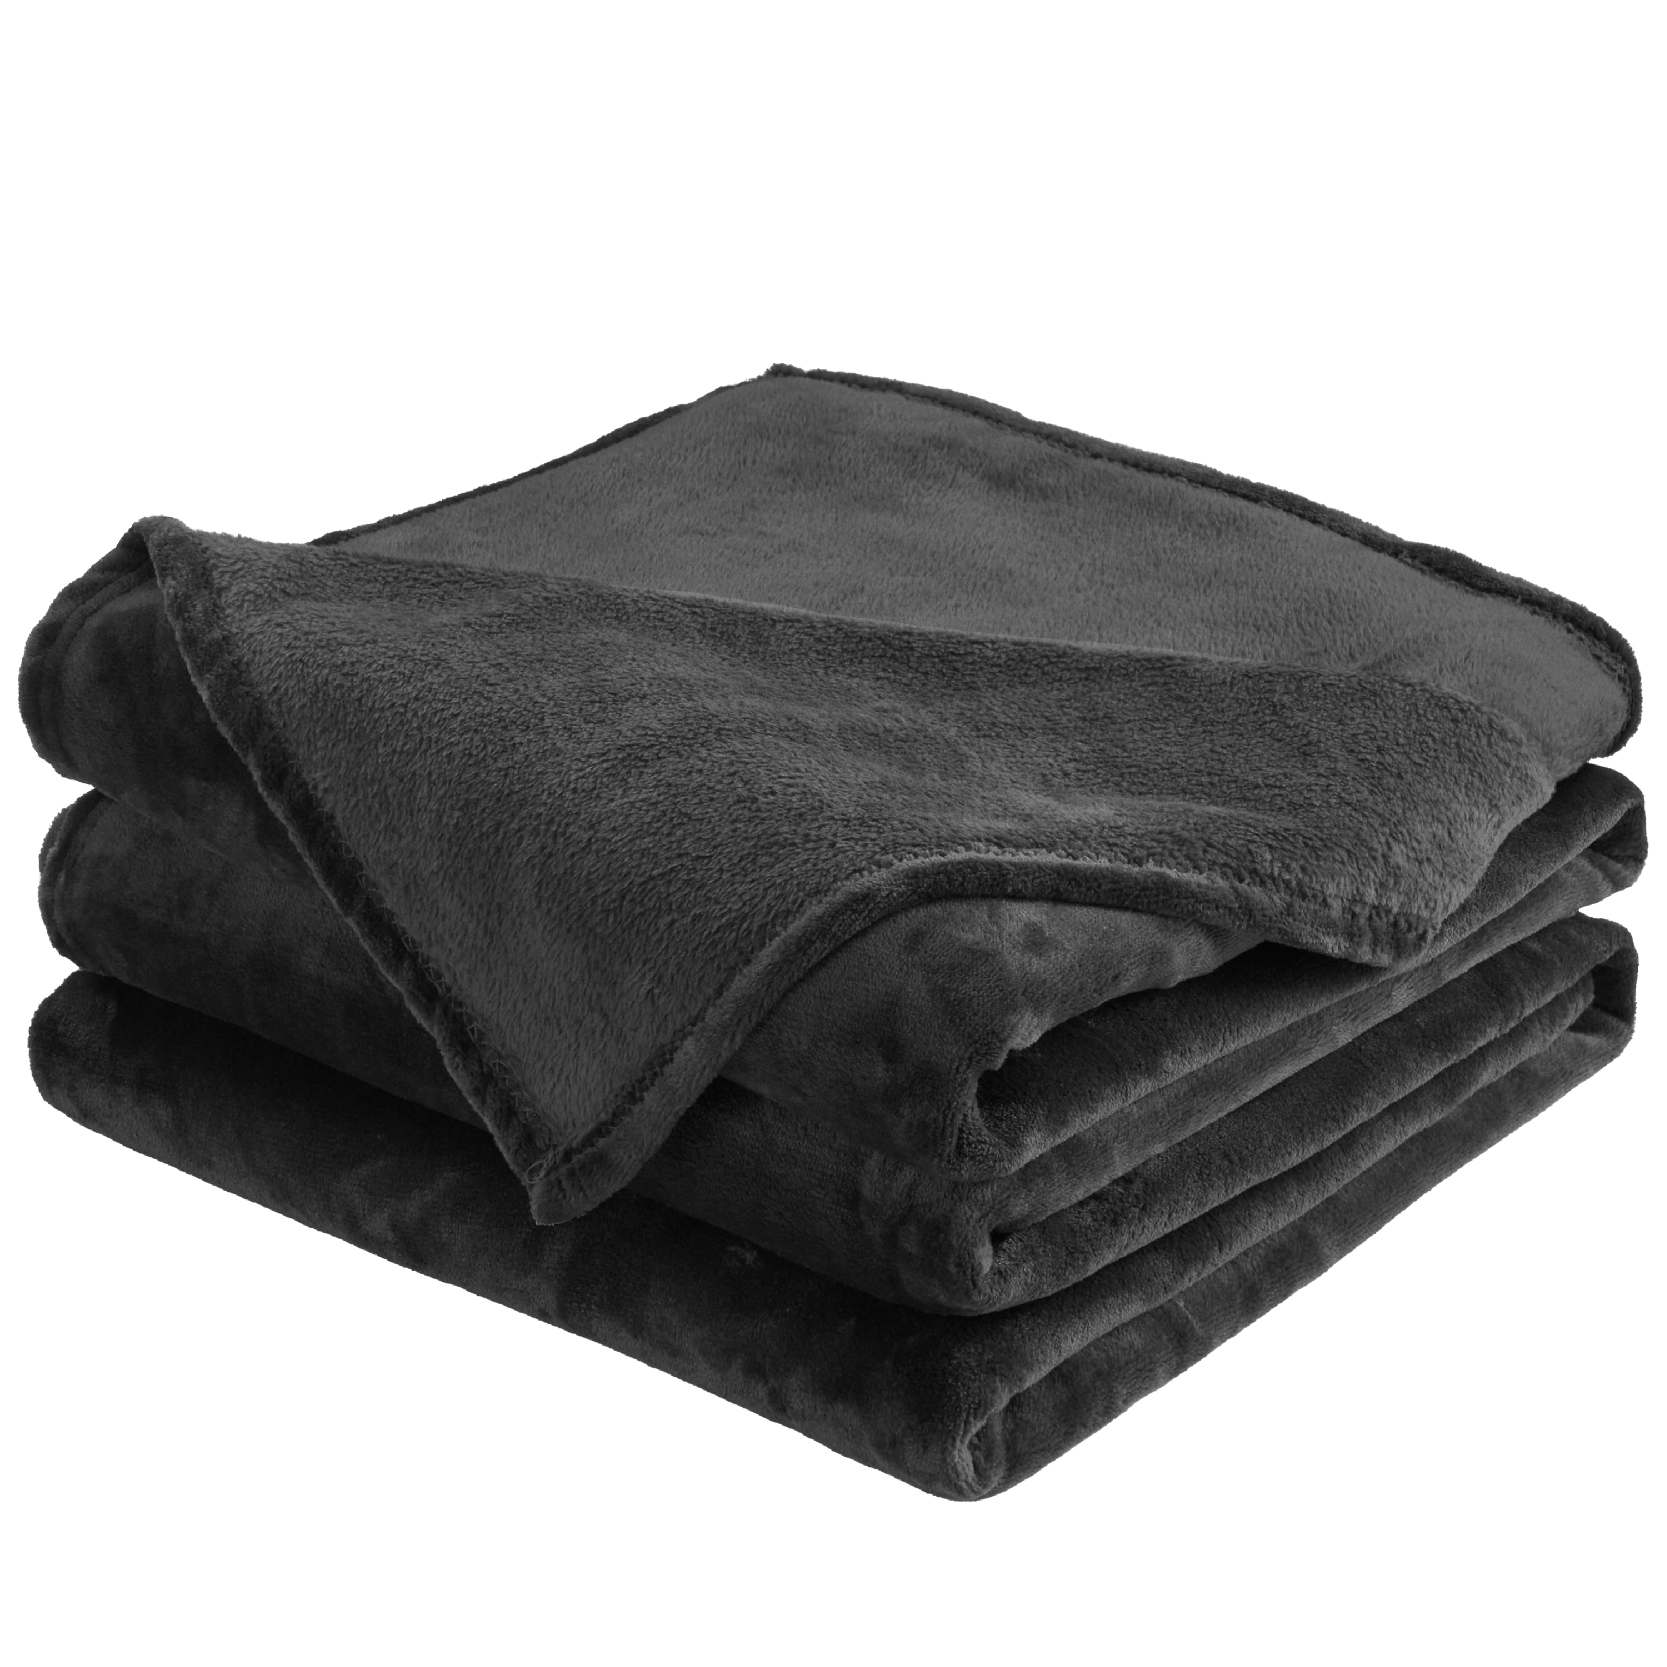 Bare Home Luxurious Ultra Soft Premium Microplush Fleece Blanket Fullqueen Dark Blue